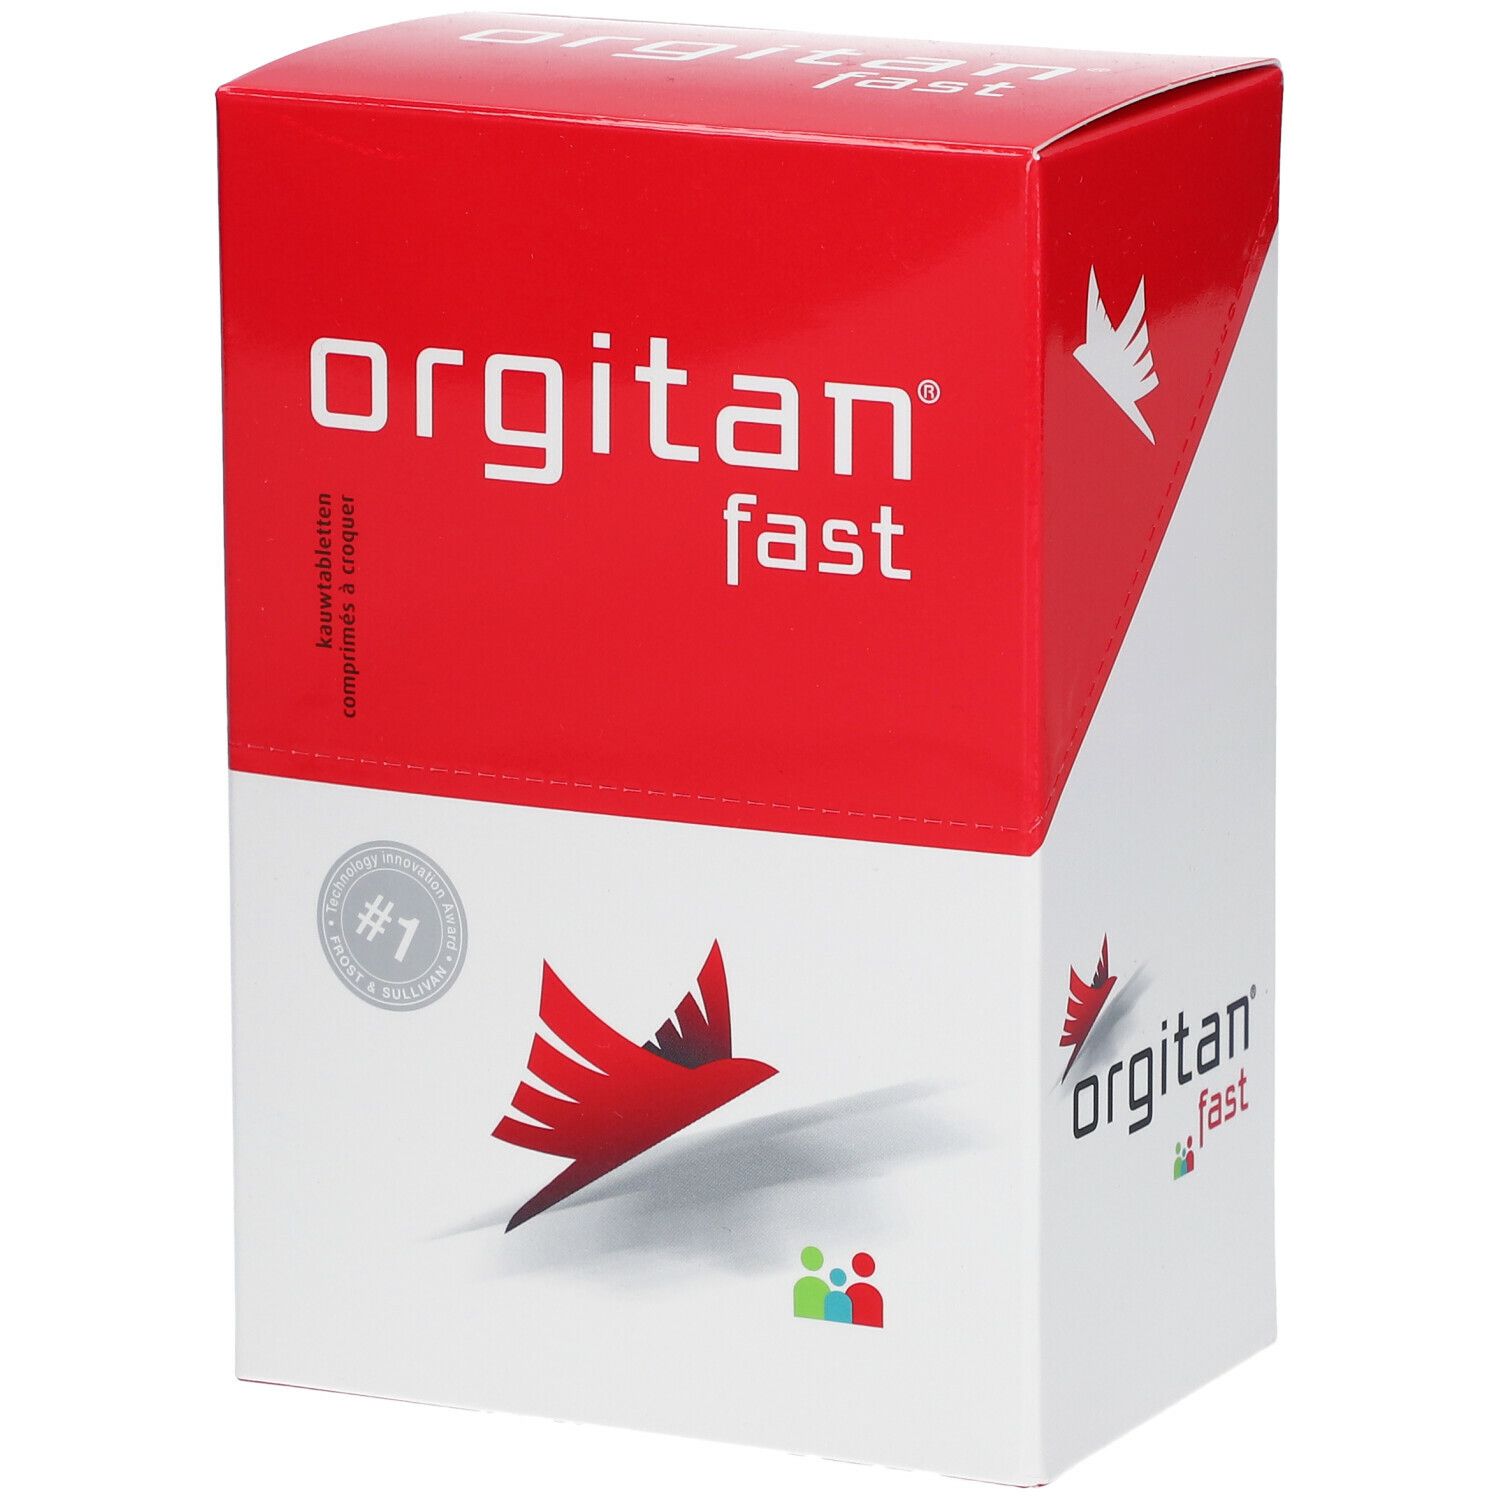 Orgitan® Fast